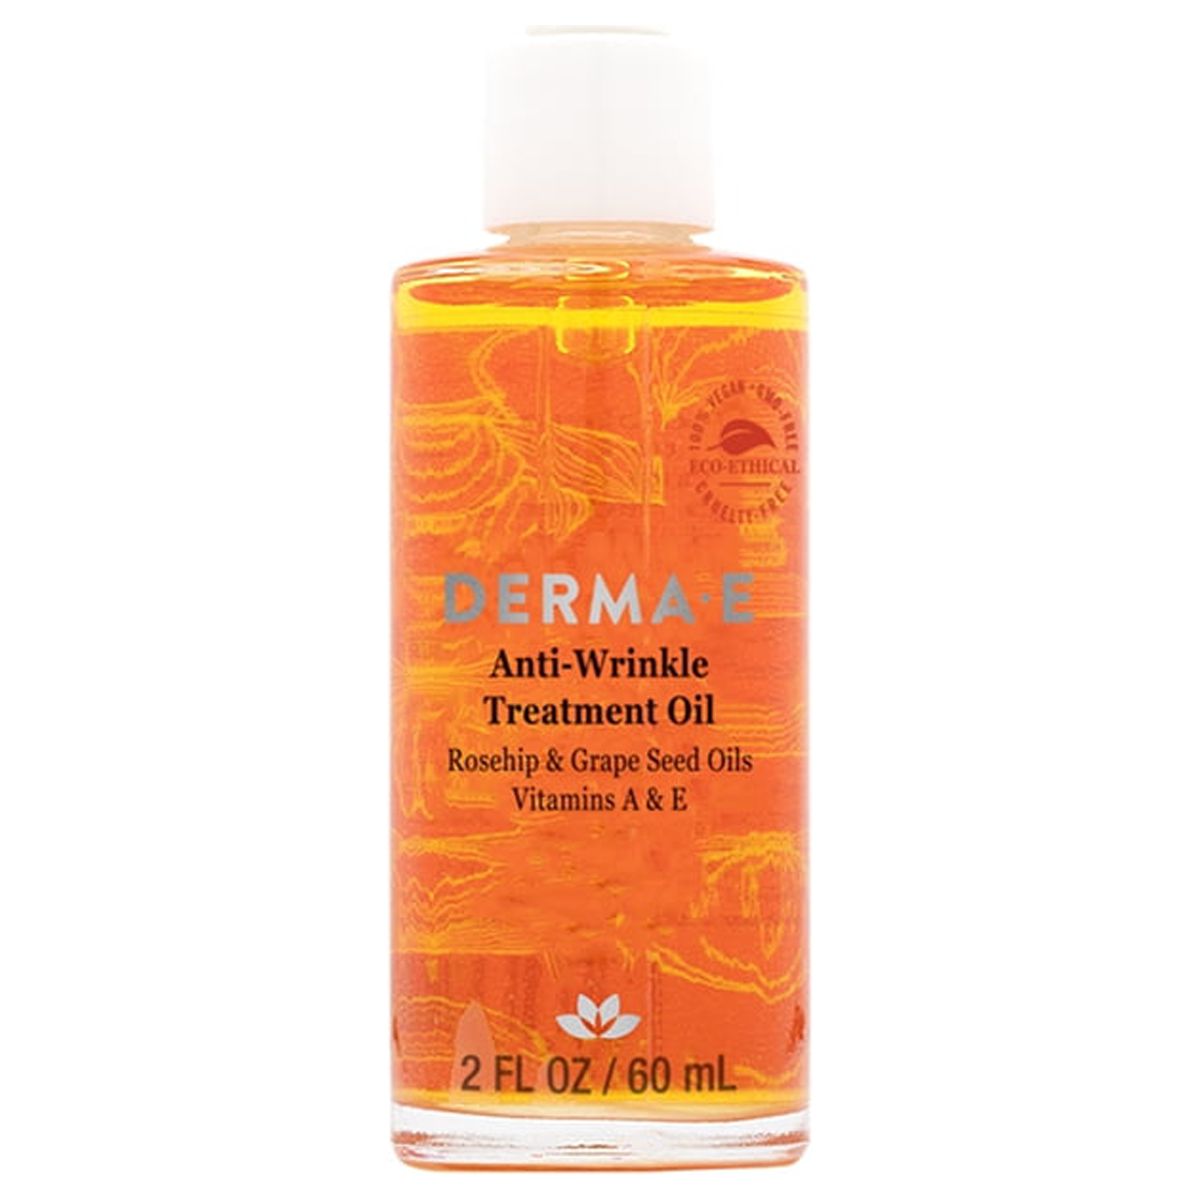 Derma E Anti-Wrinkle Retinol Facial Oil with Rosehip, Grape Seed, Vitamin E, Vegan Skin Care, 2 oz - image 1 of 10